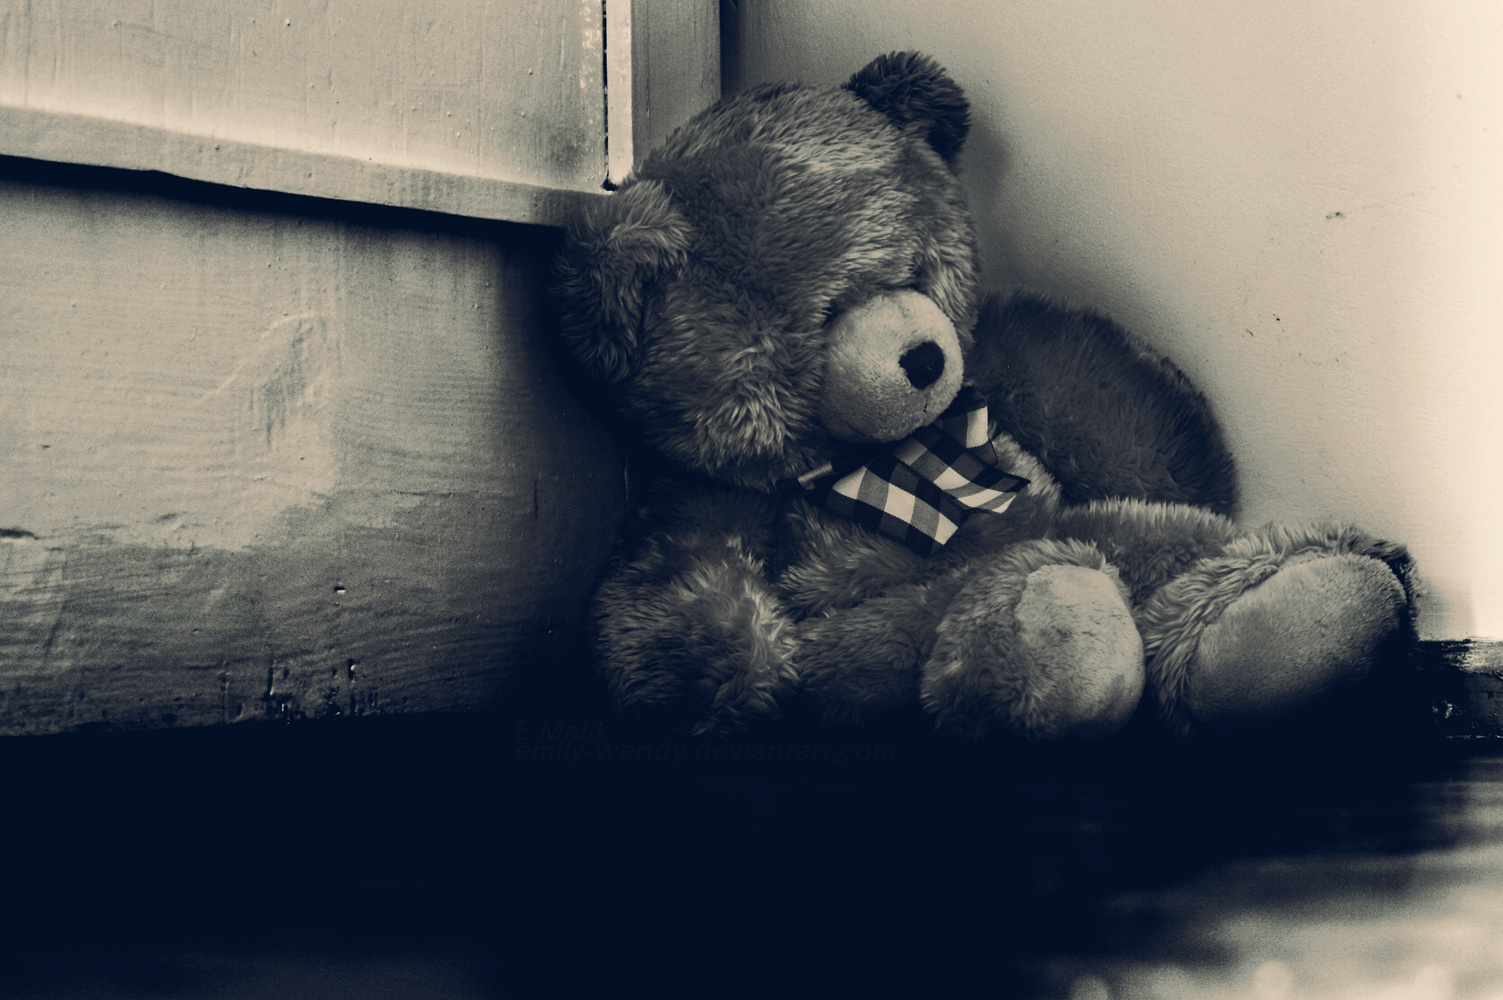 dark, emo, black & white, stuffed animal, teddy bear